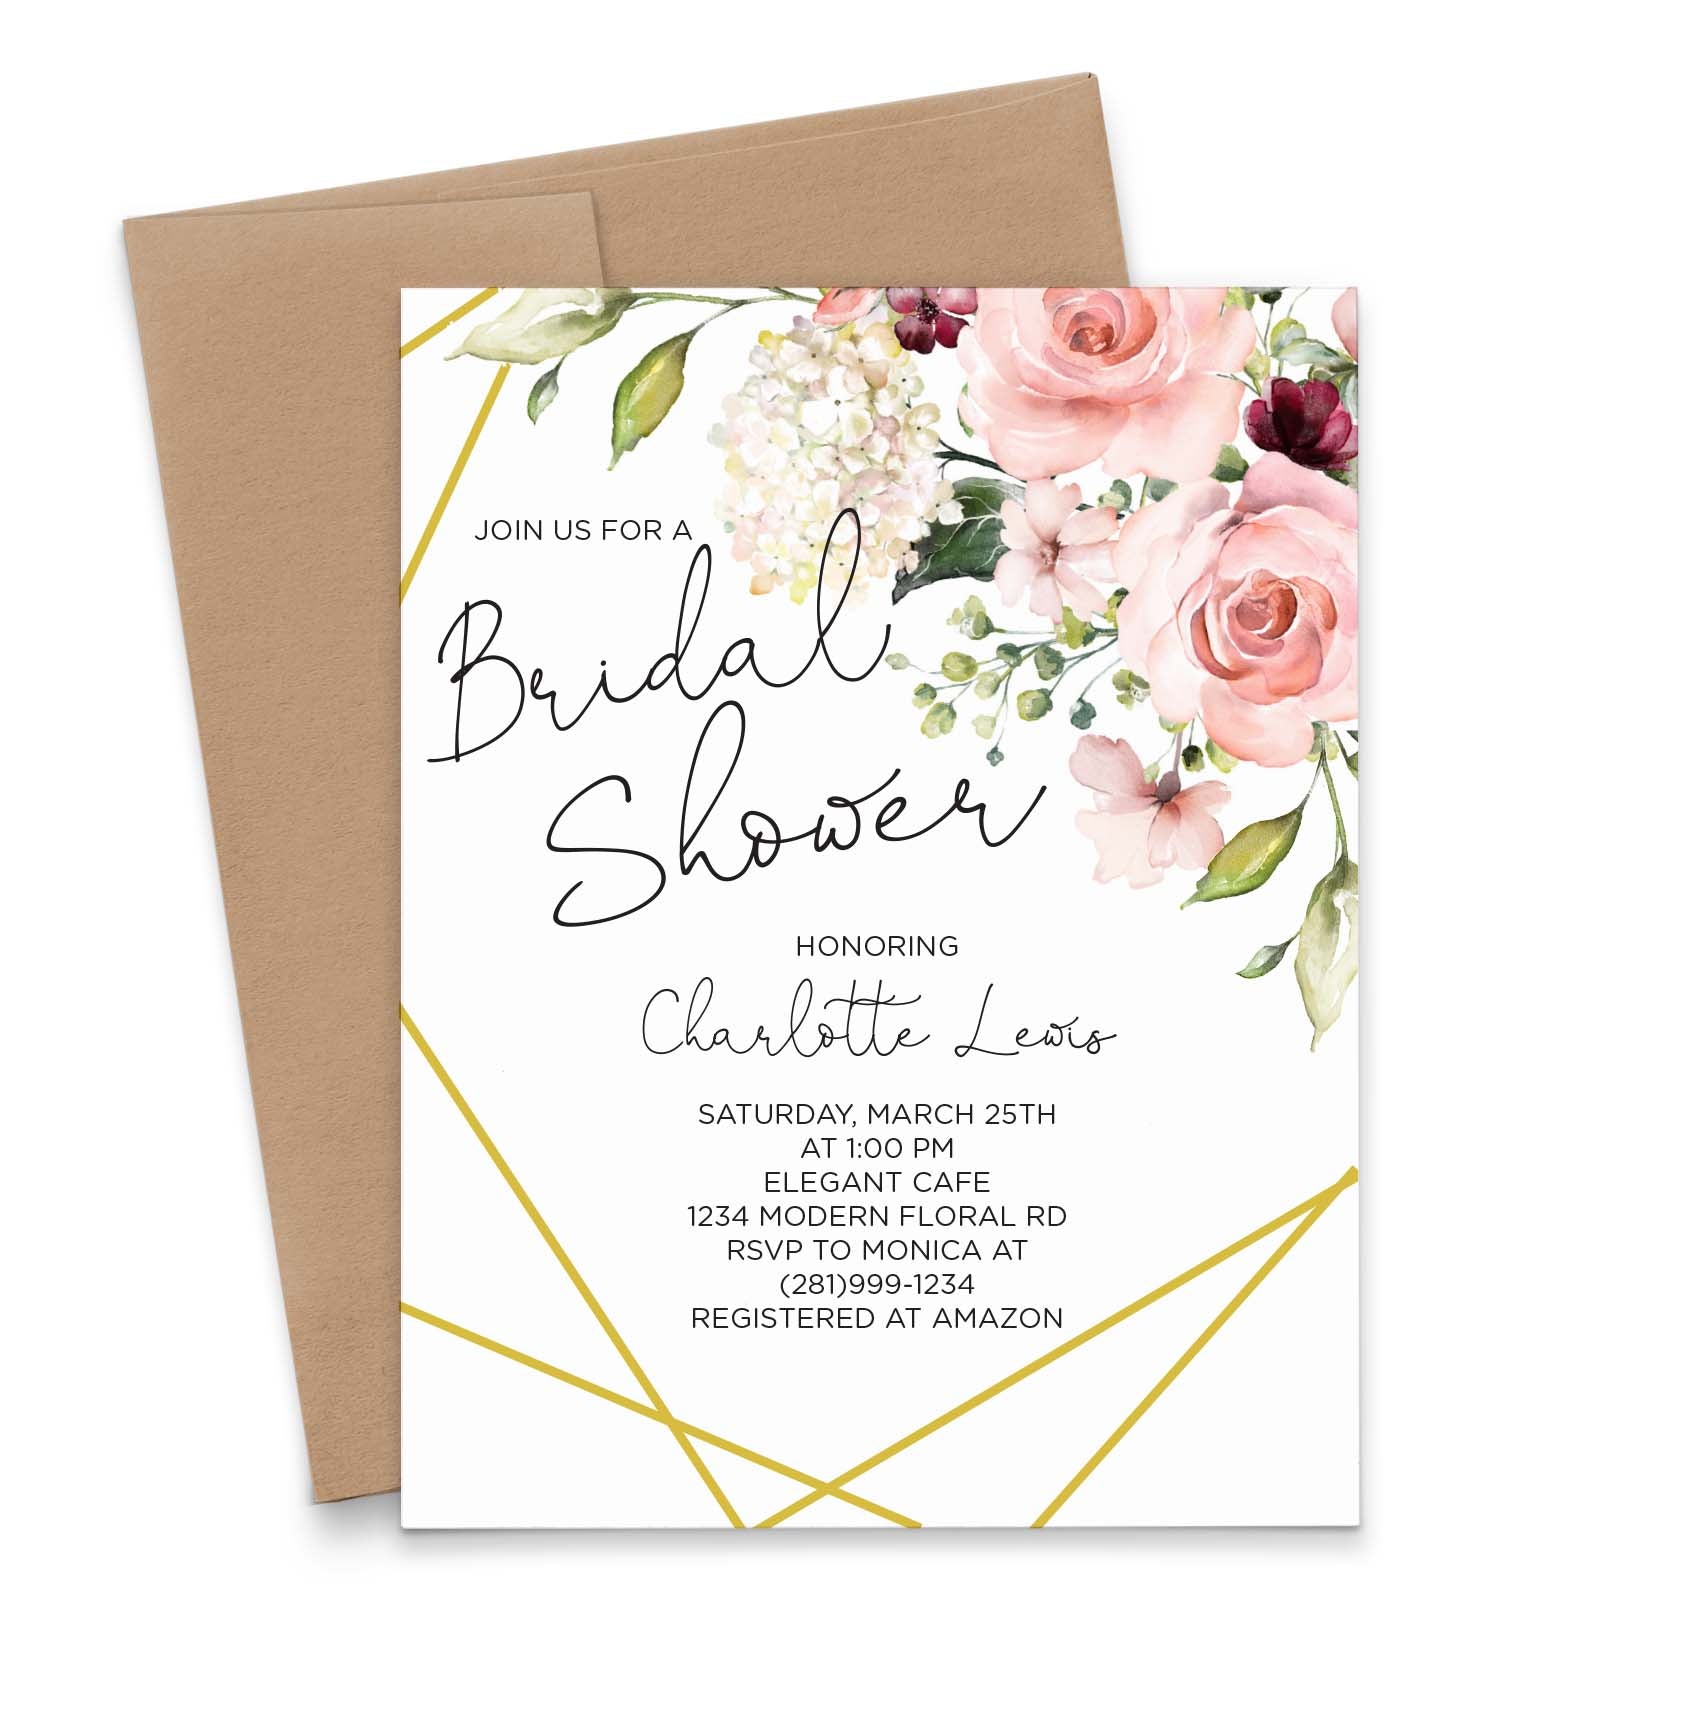 Themed Bridal Shower Invitations